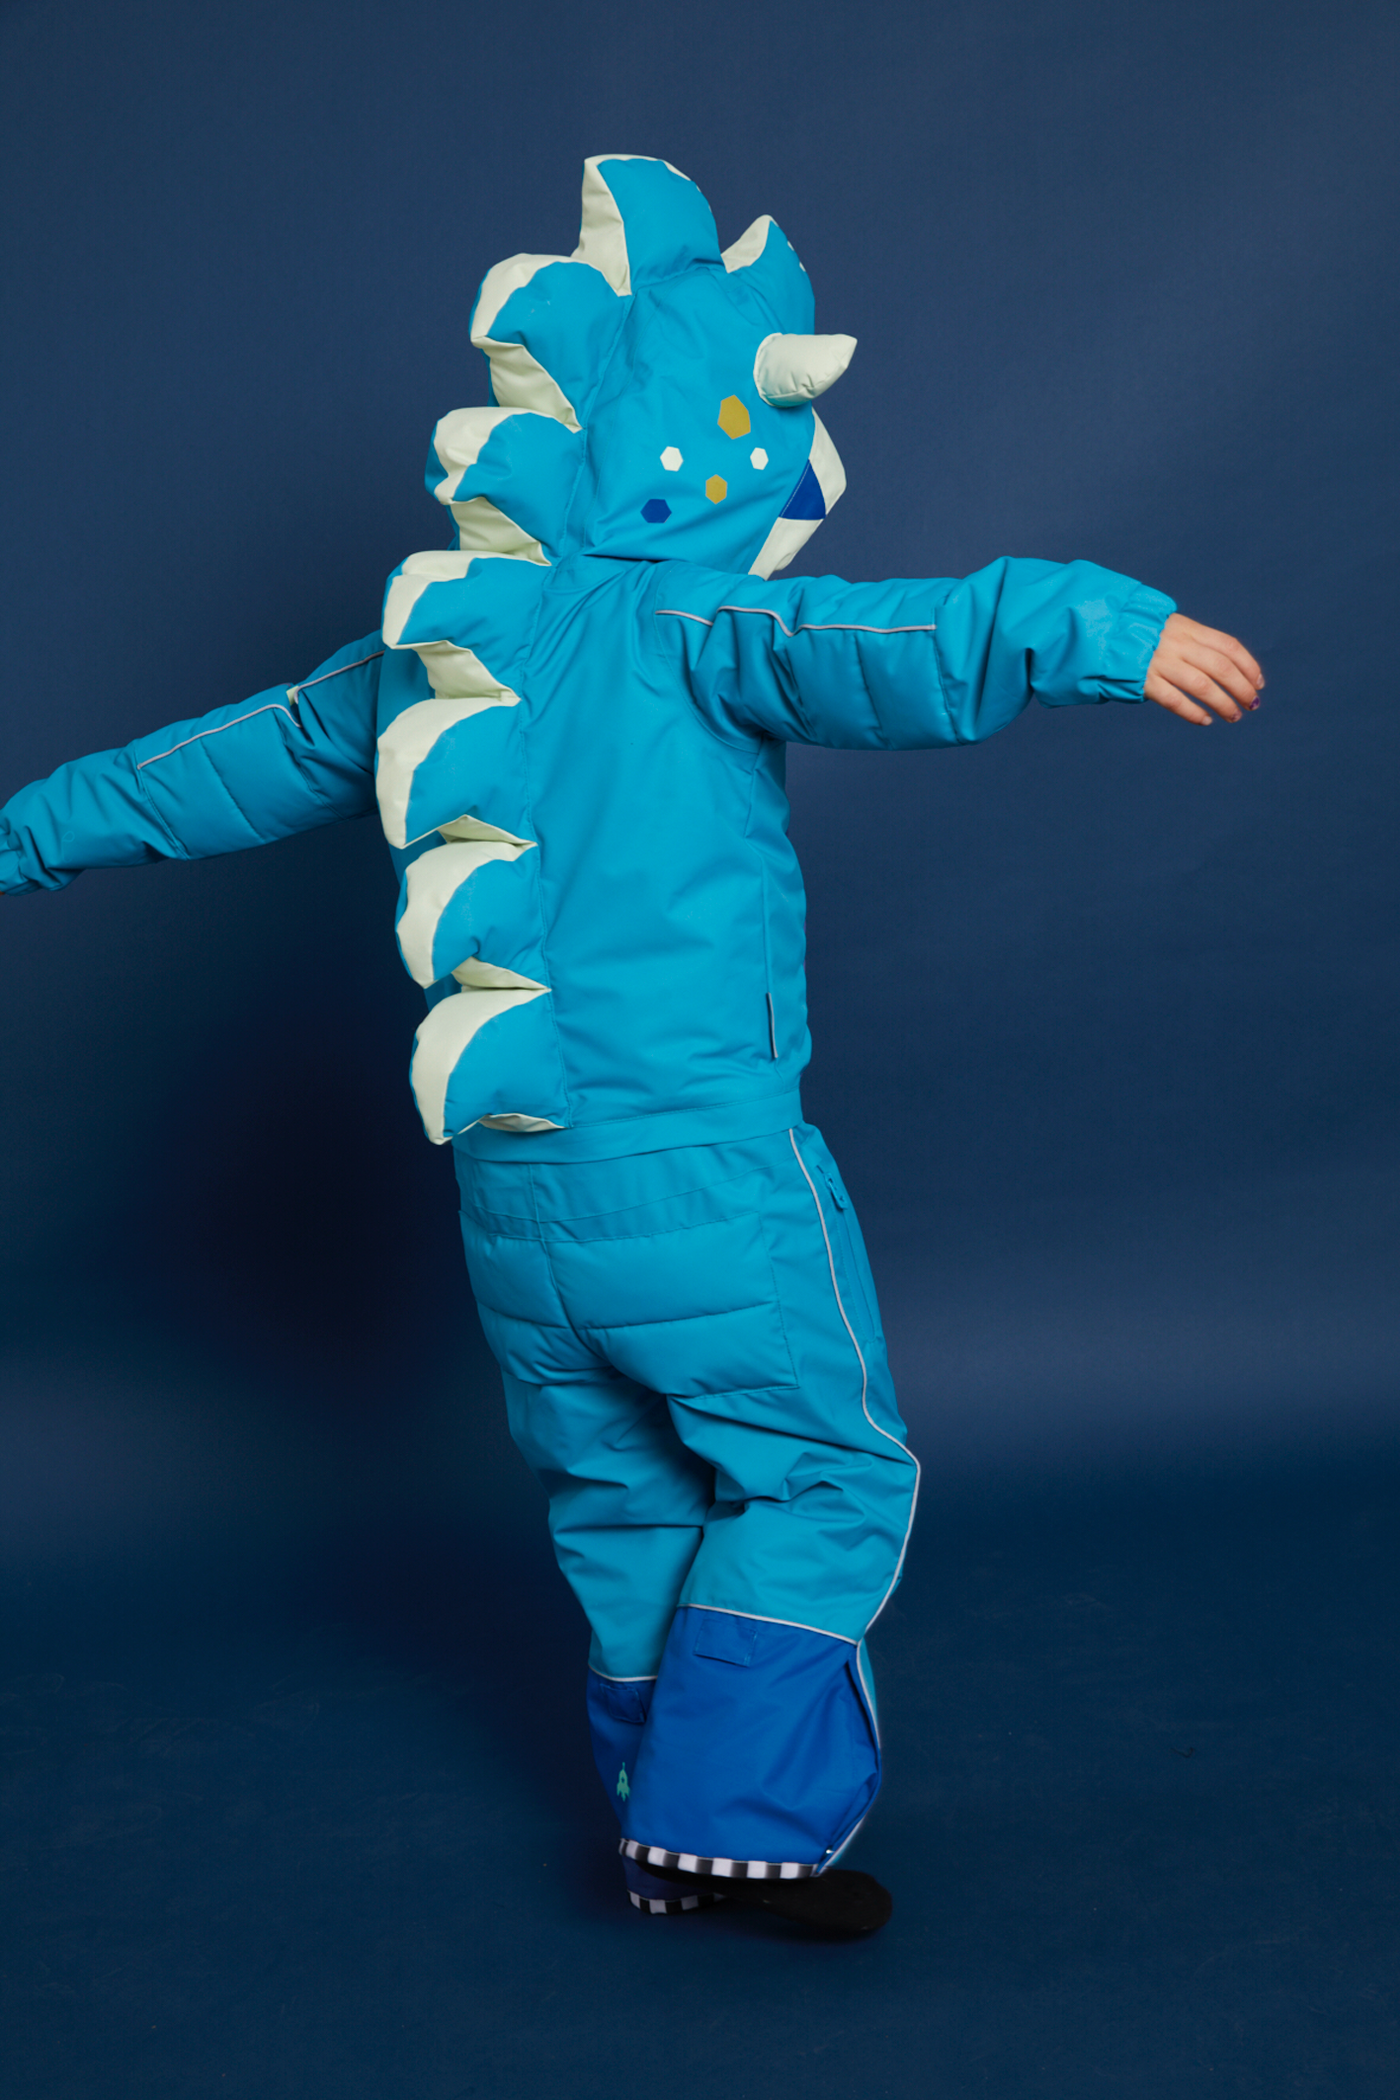 WeeDo Kids Snowsuit Monster Blue - DISCONTINUED